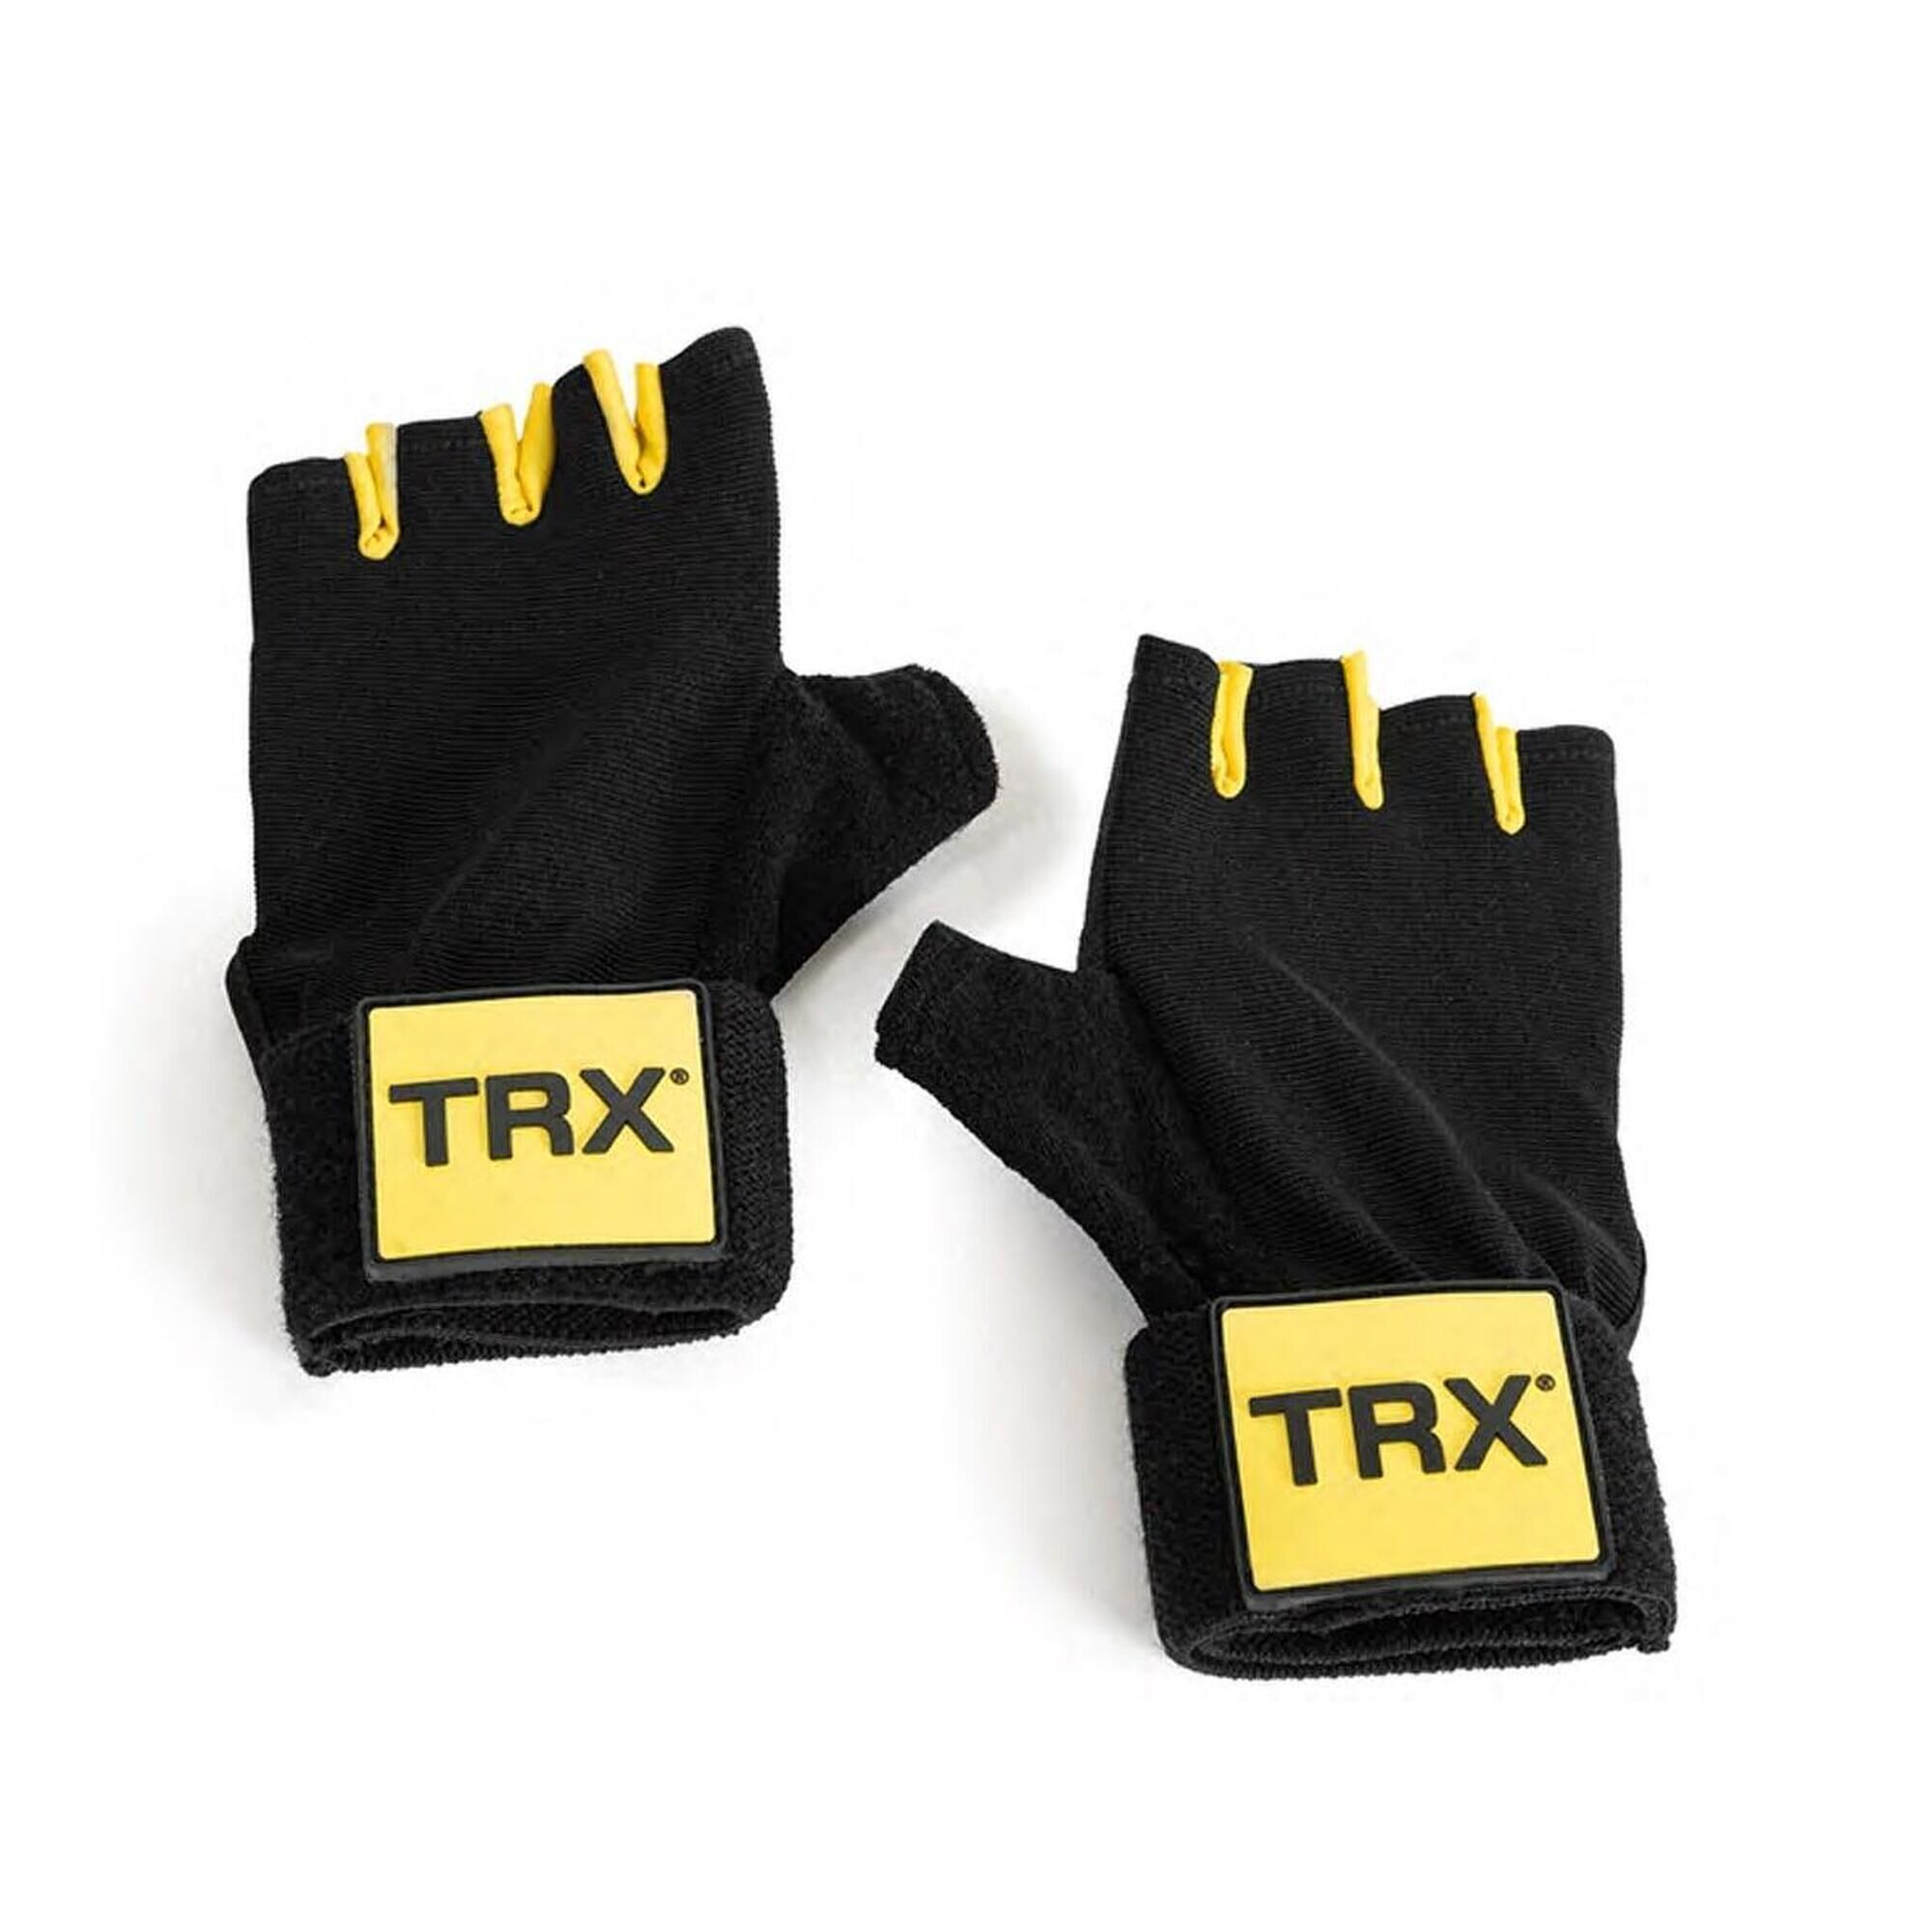 TRX TRX training Gloves Small